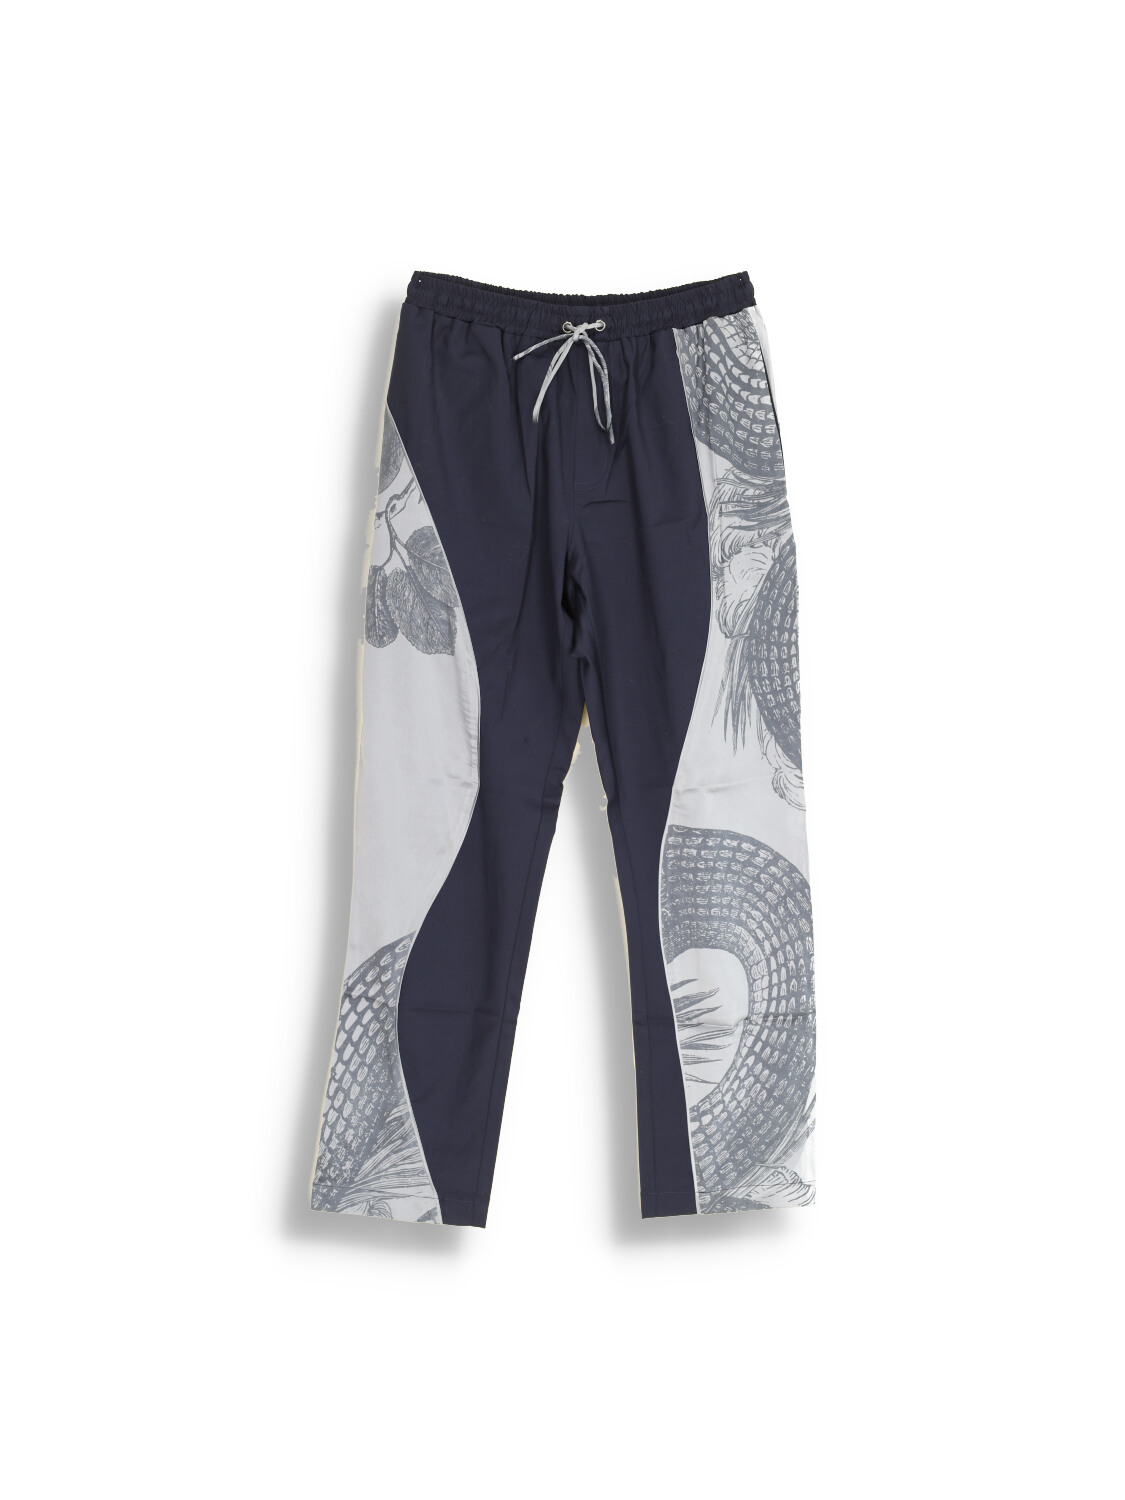 Pants Nosy Garden Eden - silk pants with print design